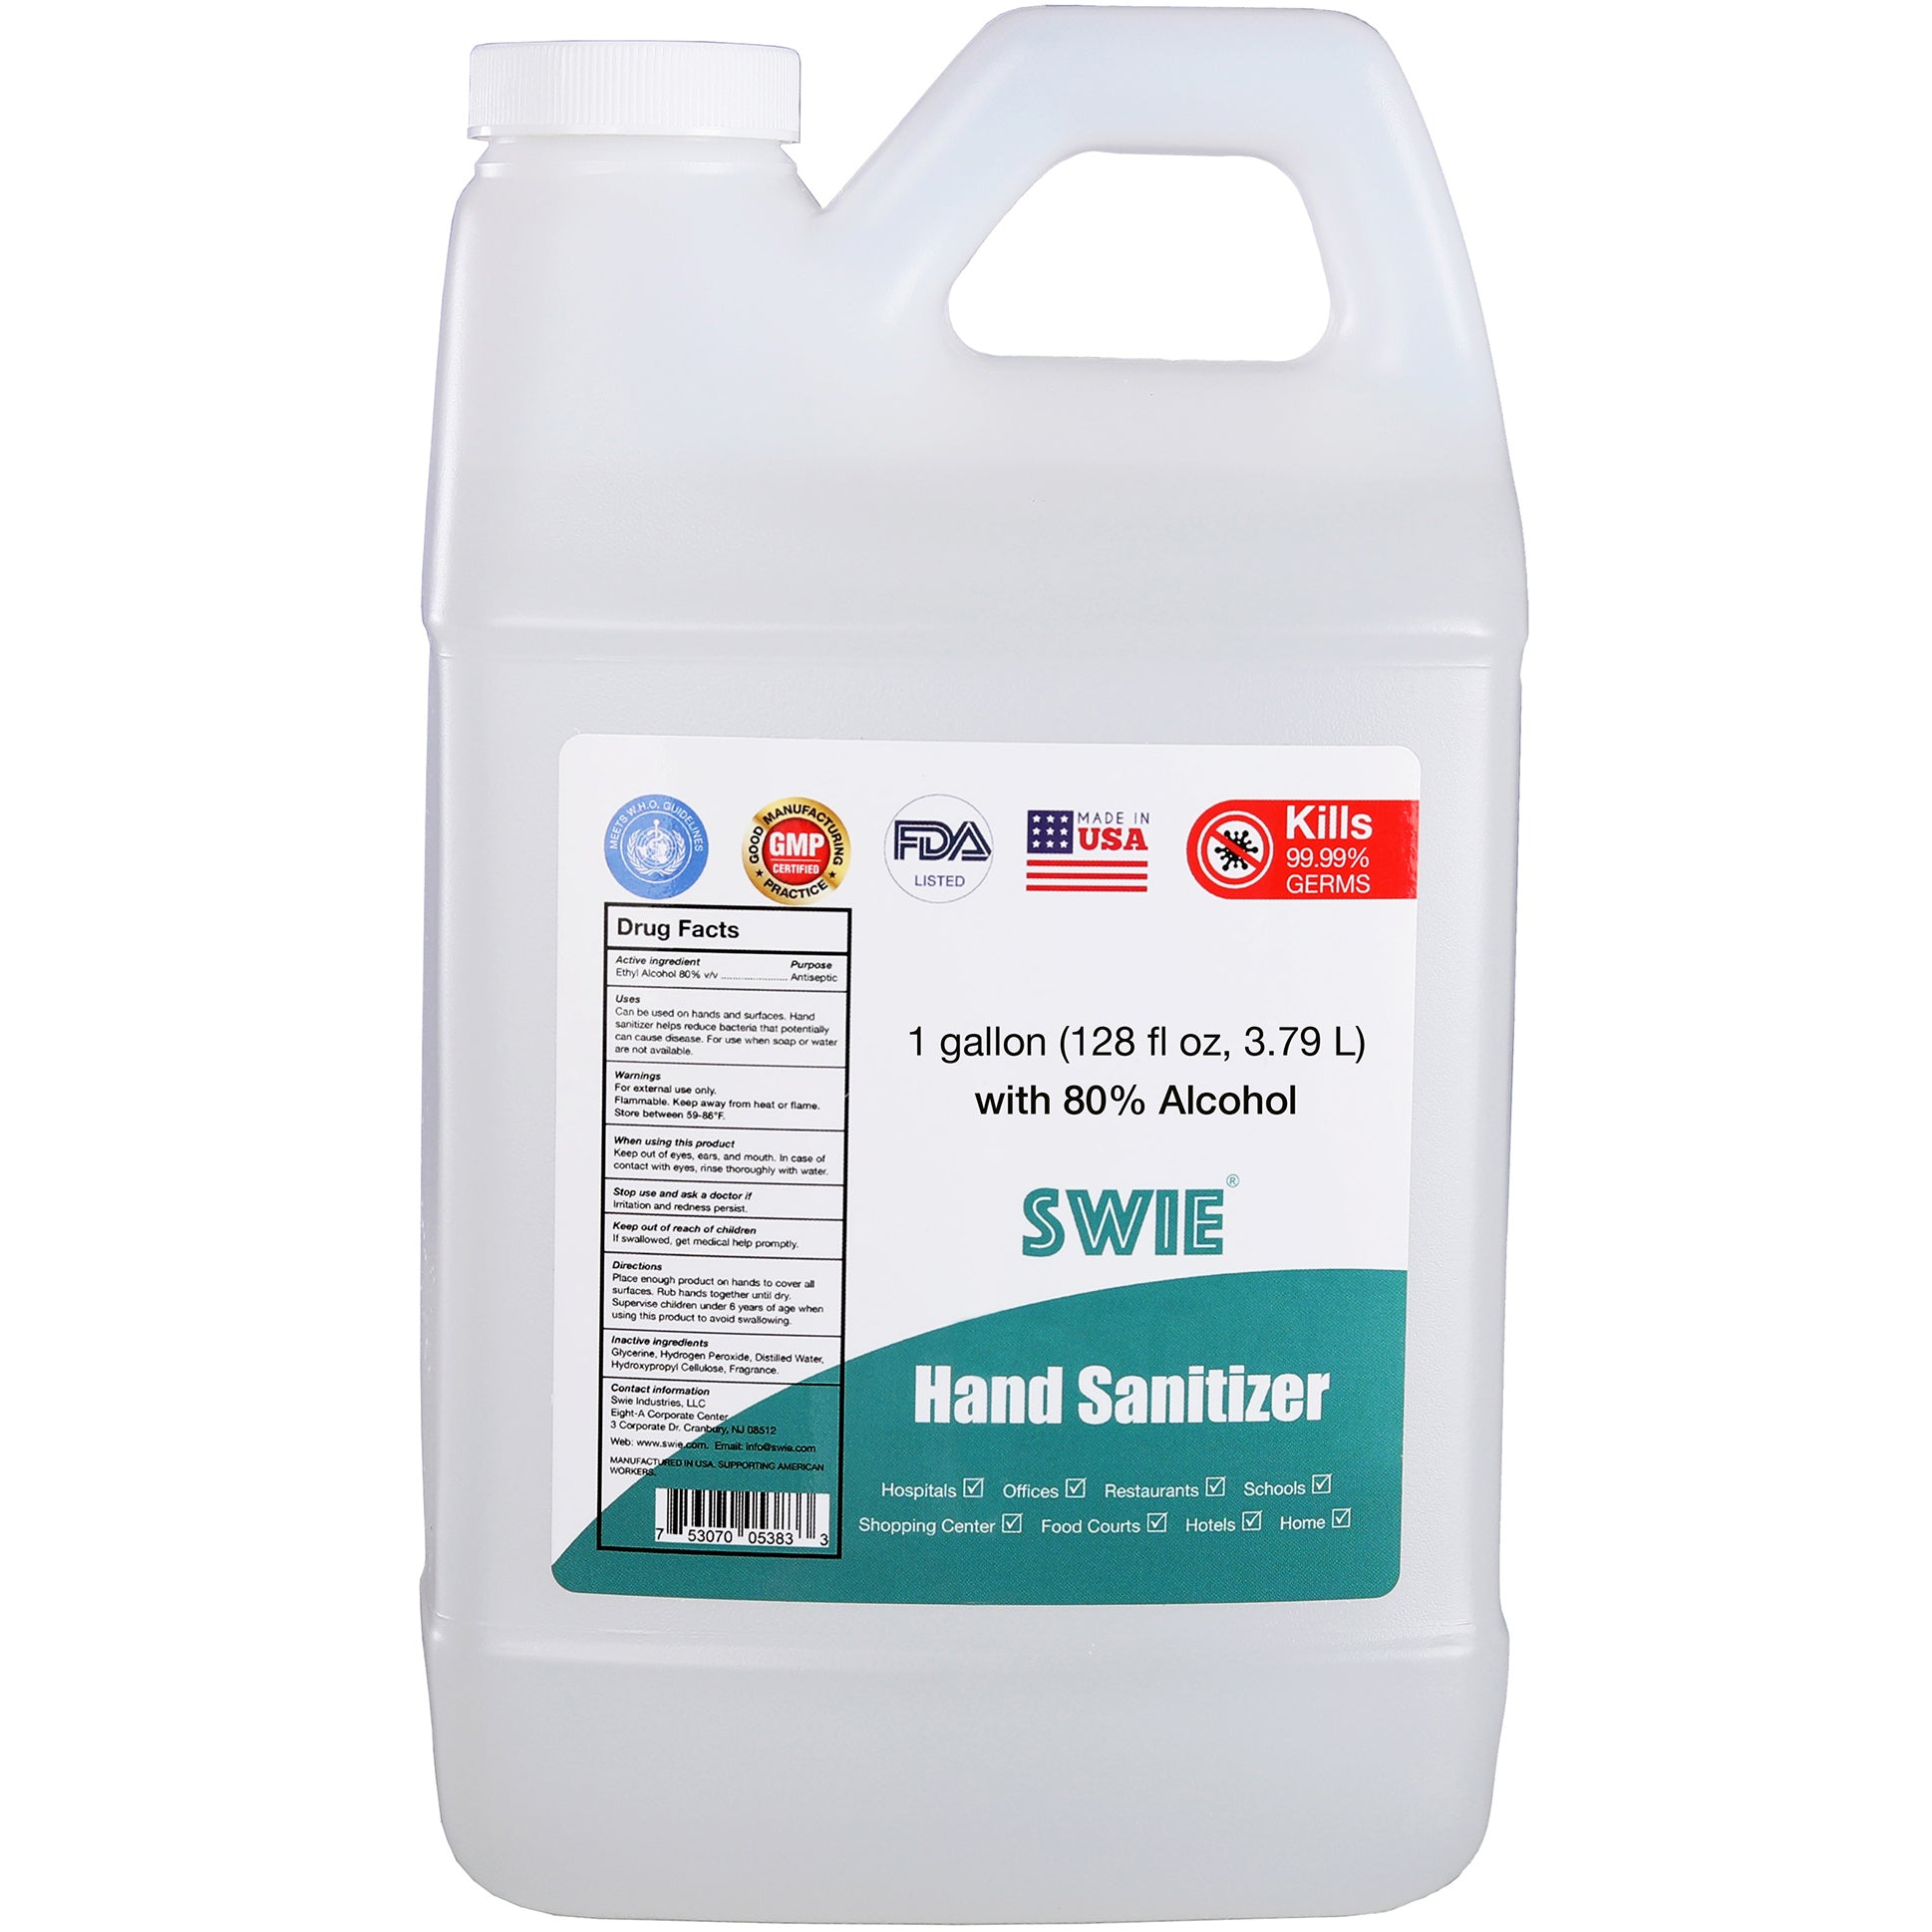 Hand Sanitizer Refill, One Gallon (128 fl oz, 3.79L)